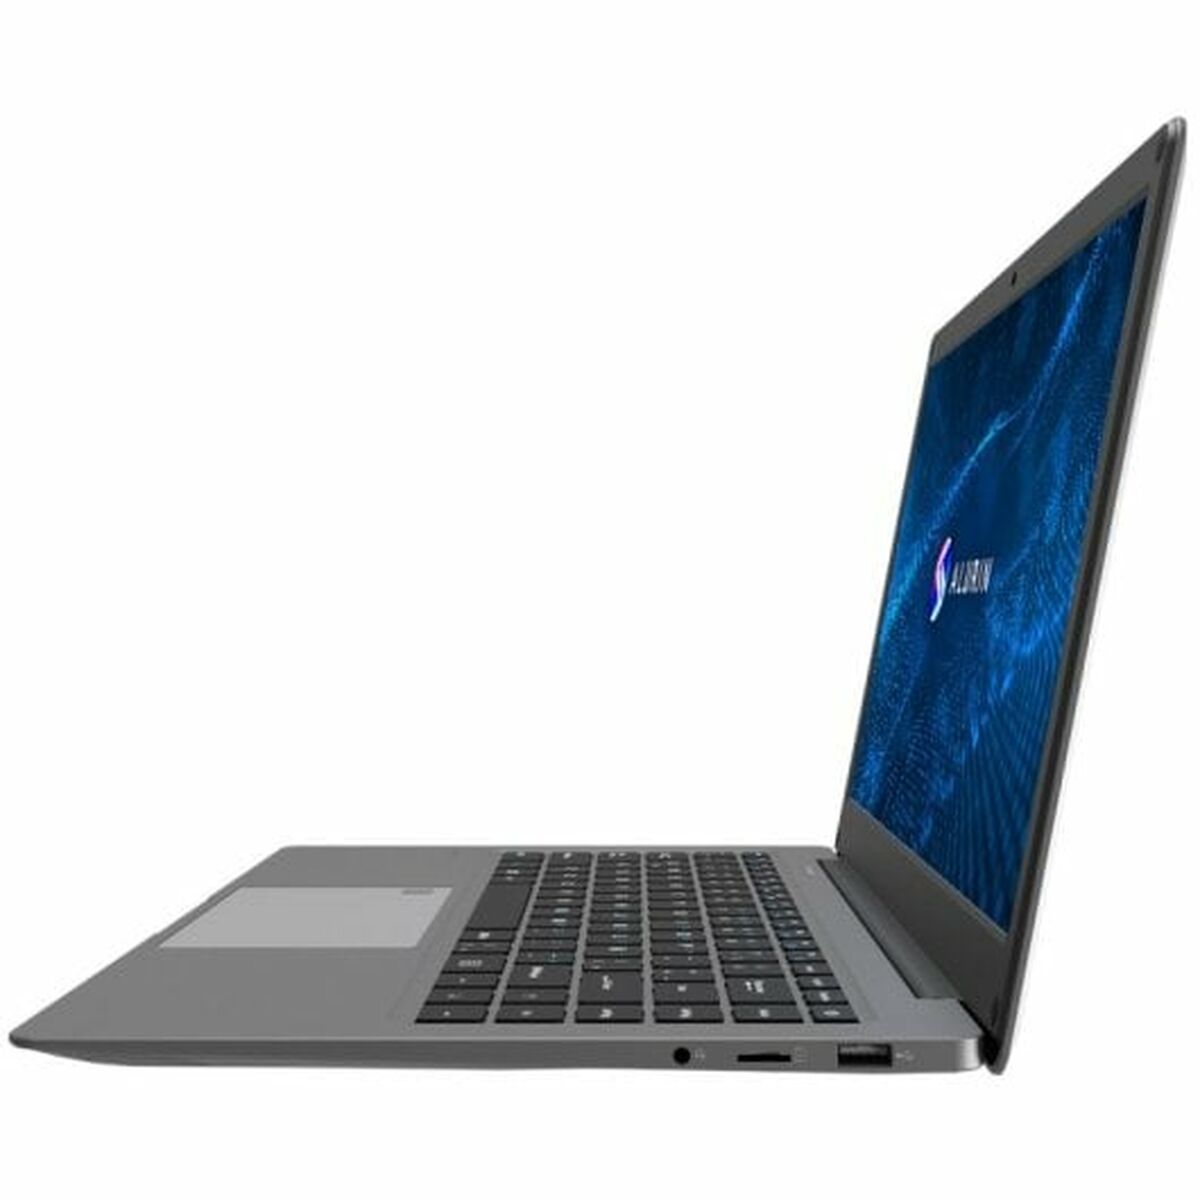 Laptop Alurin  Go Start N24 14" Intel Celeron N4020 8 GB RAM 256 GB SSD - CA International  